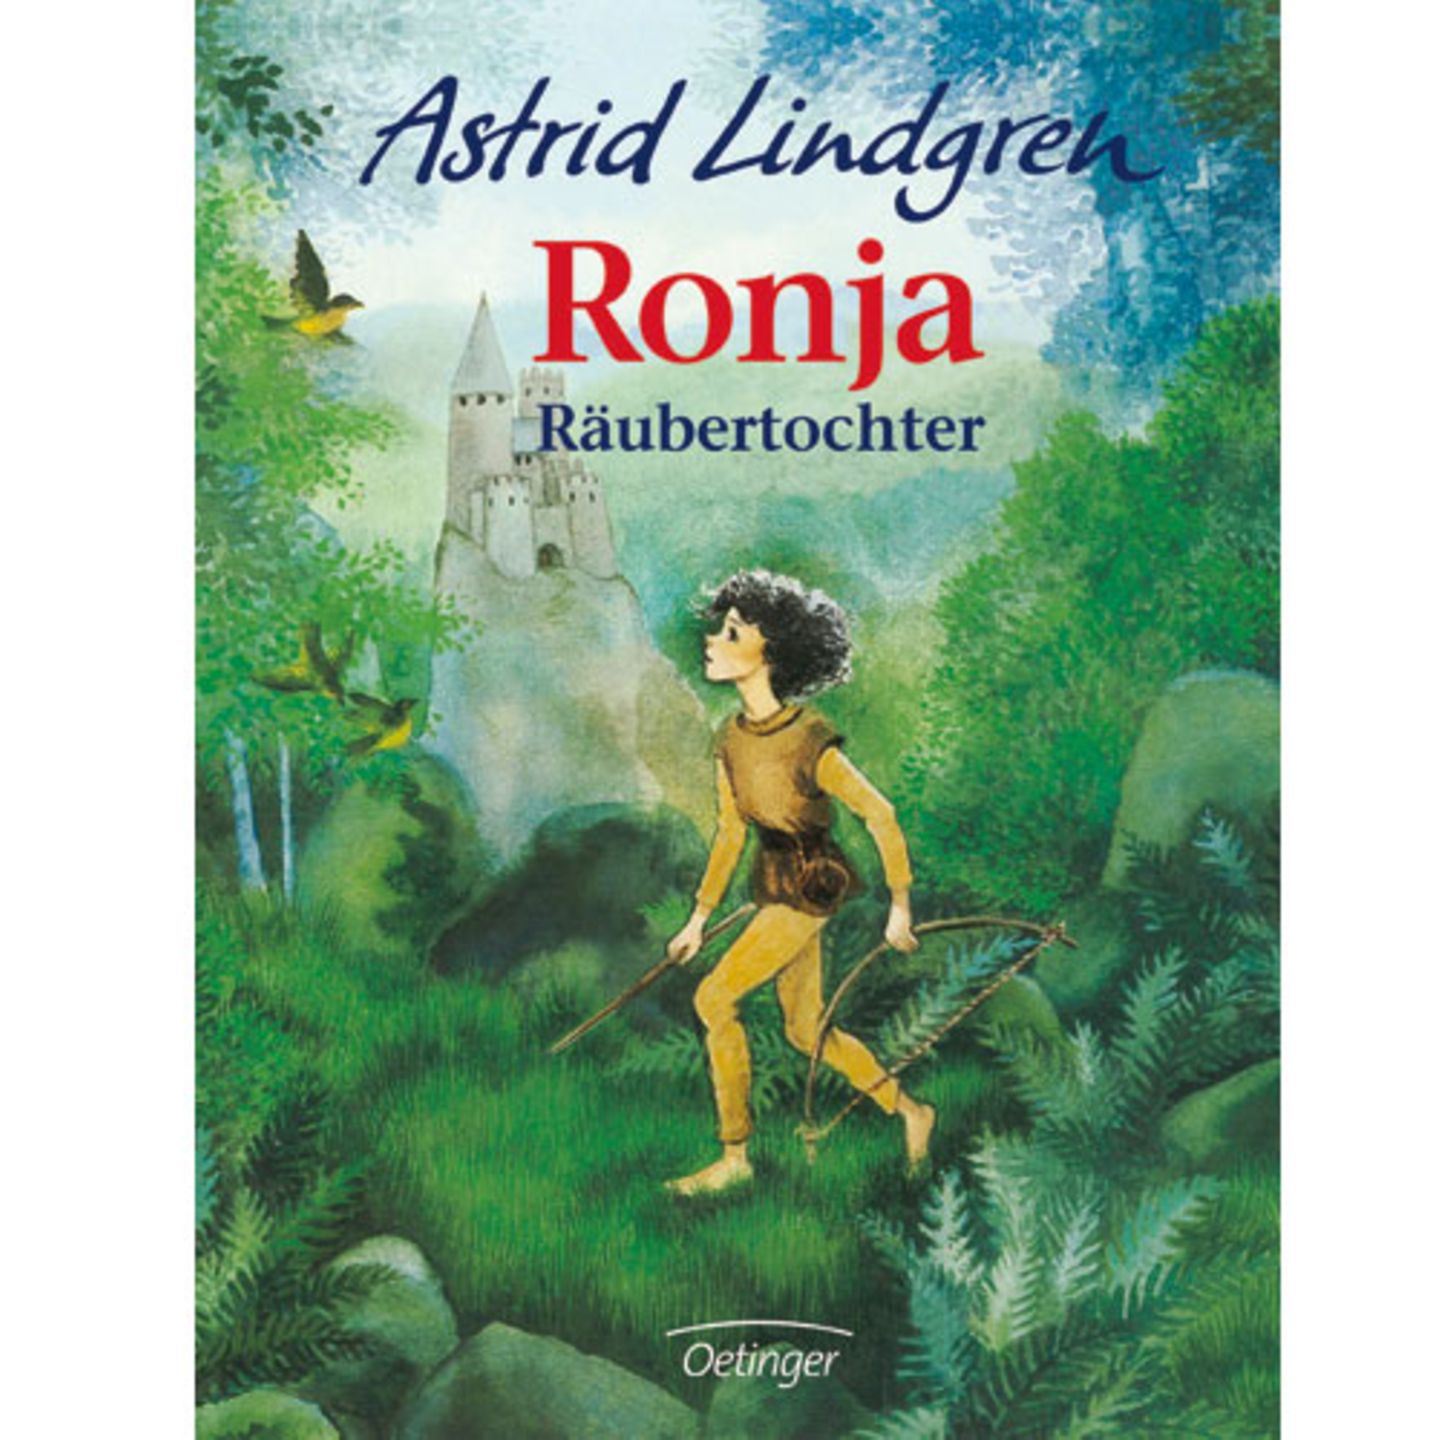 Astrid Lindgren: "Ronja Räubertochter"